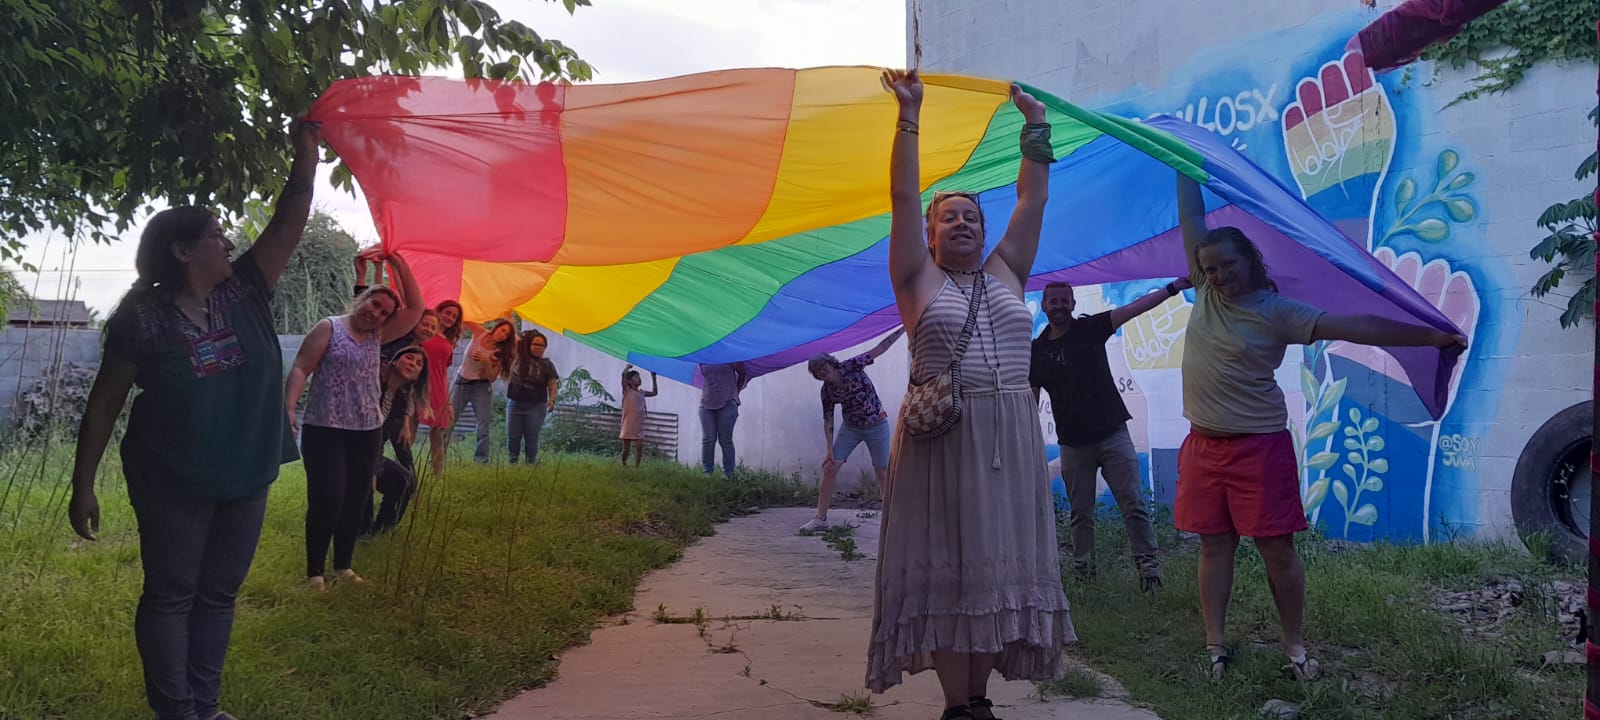 El orgullo está en Ituzaingó: Todo sobre la primera "Plaza del Orgullo" del distrito